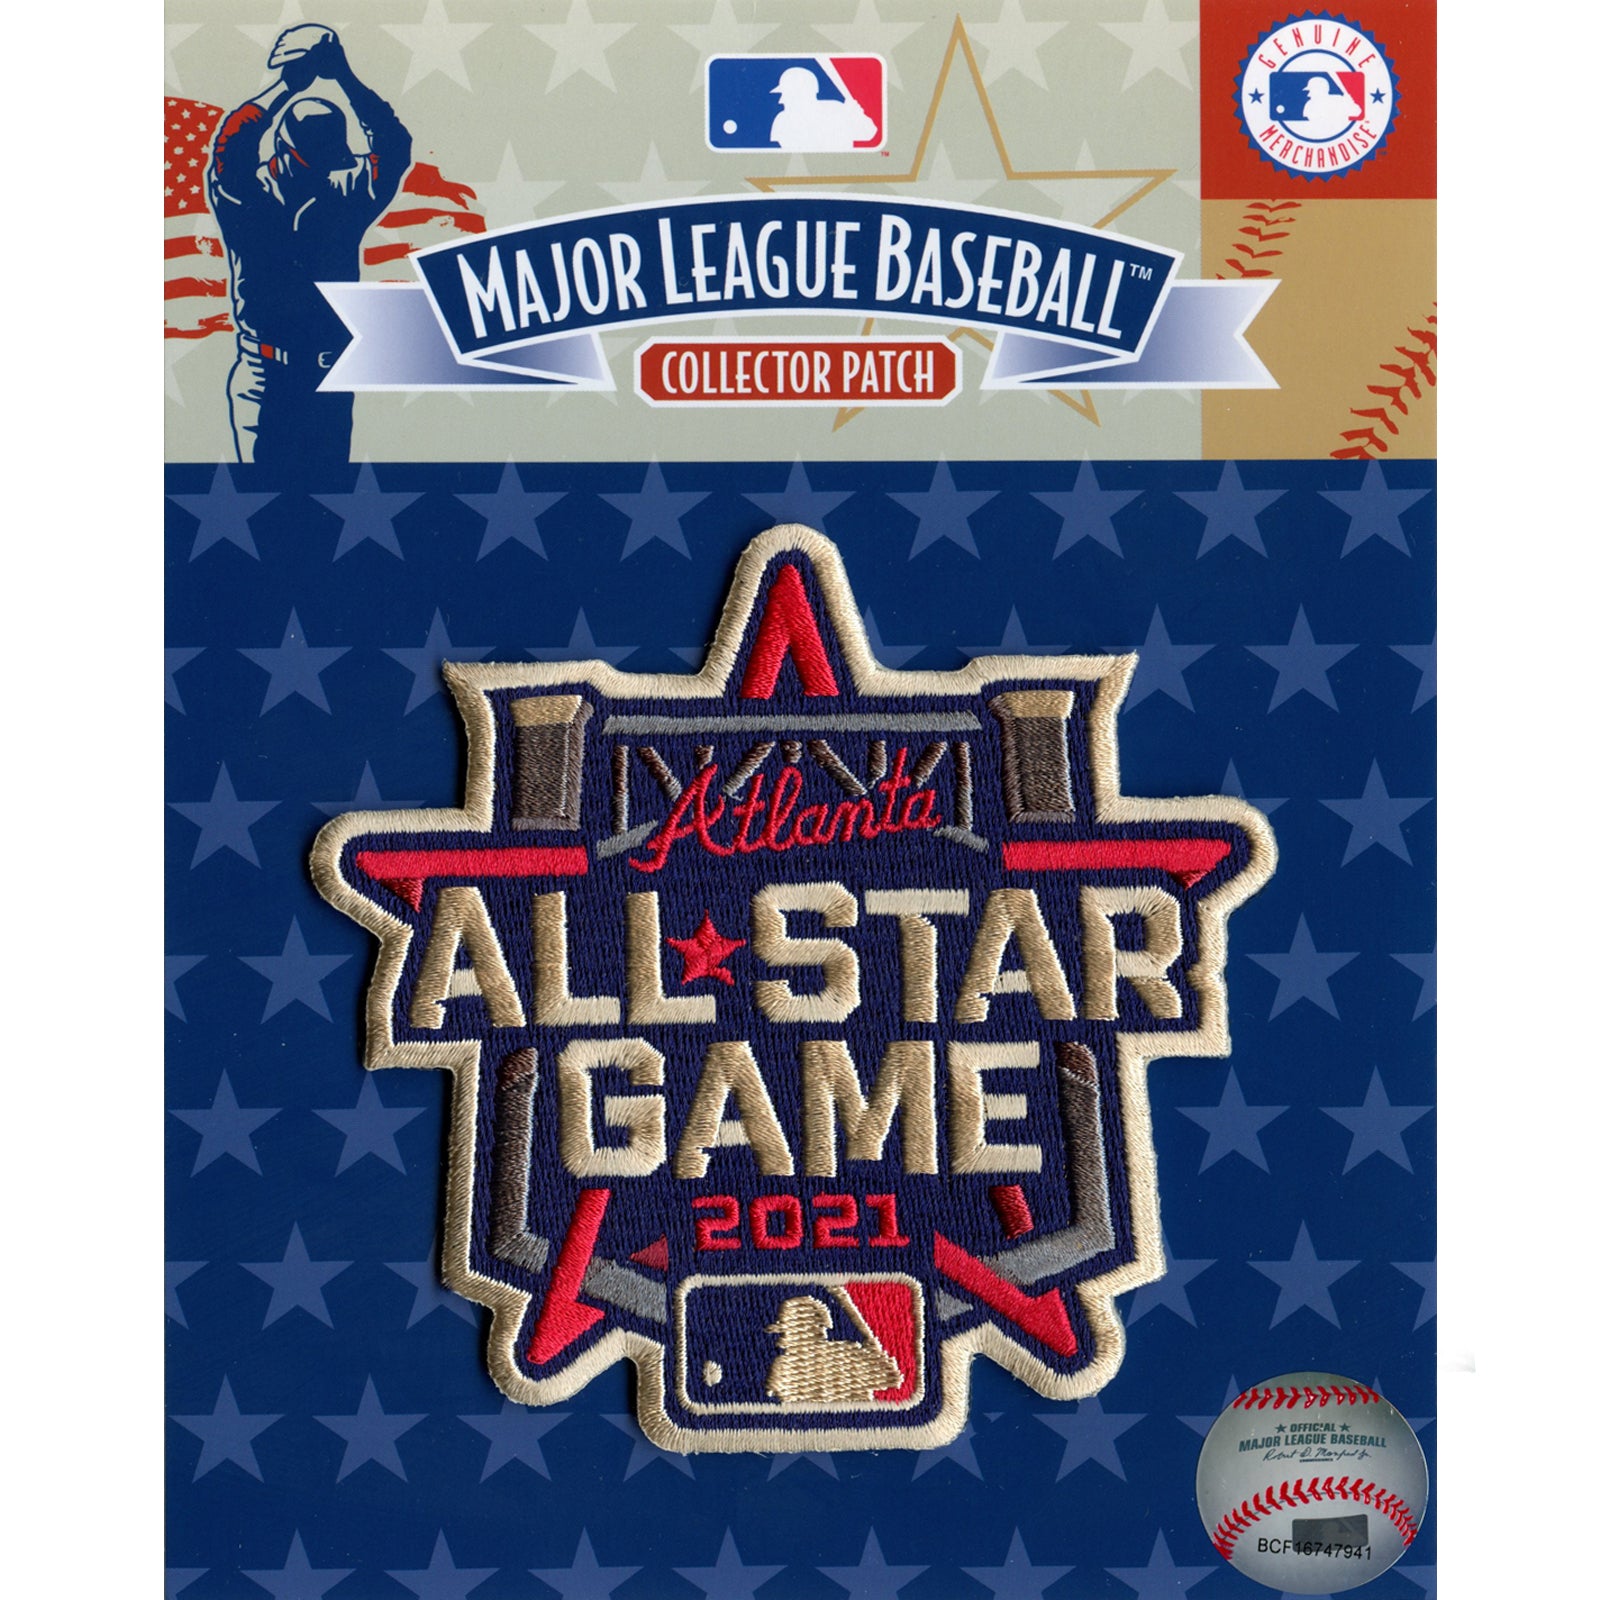 Patchwork: Atlanta Braves cover All-Star logo on jerseys, shift